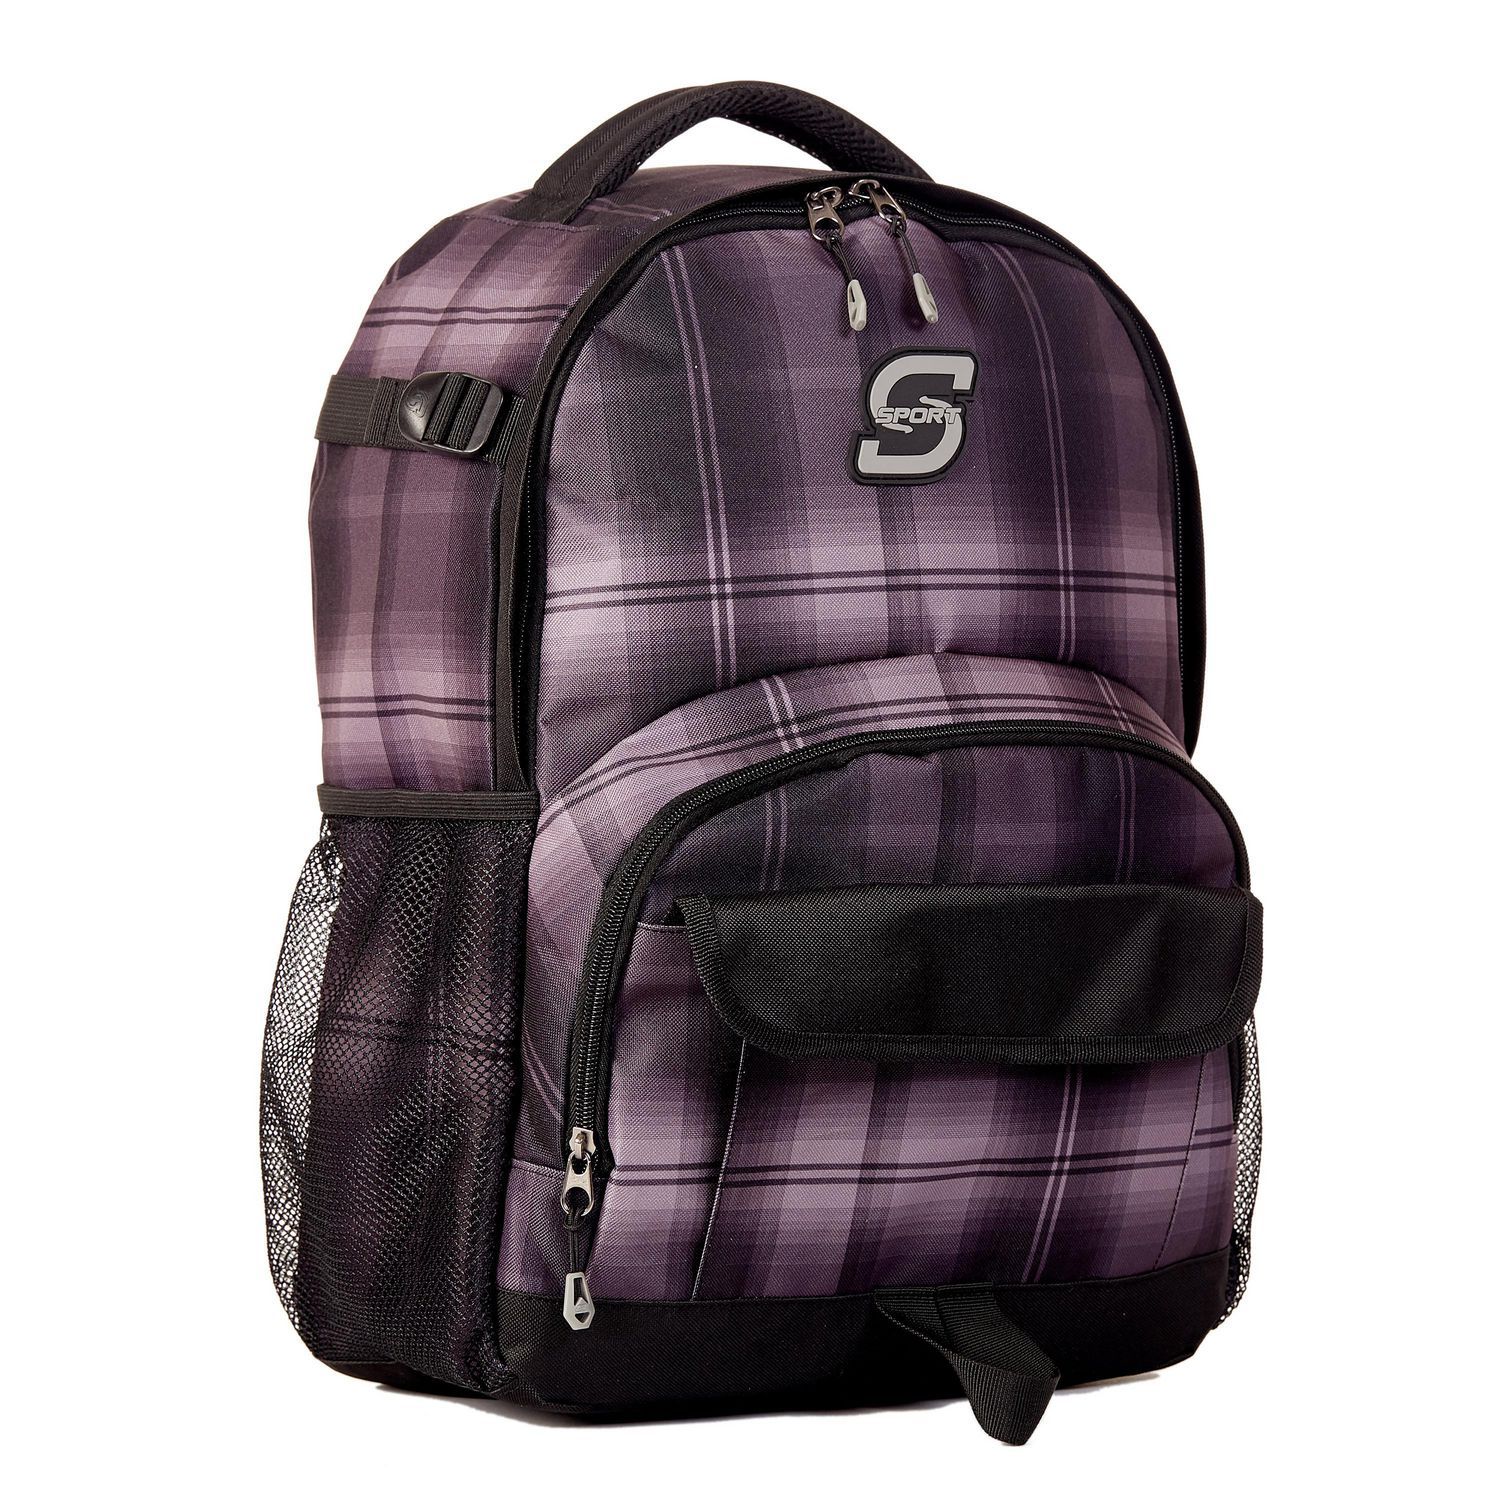 Skechers Backpack Nylon Double Strap Adjustable Bag Gym Bag Knapsack Blue  White | eBay